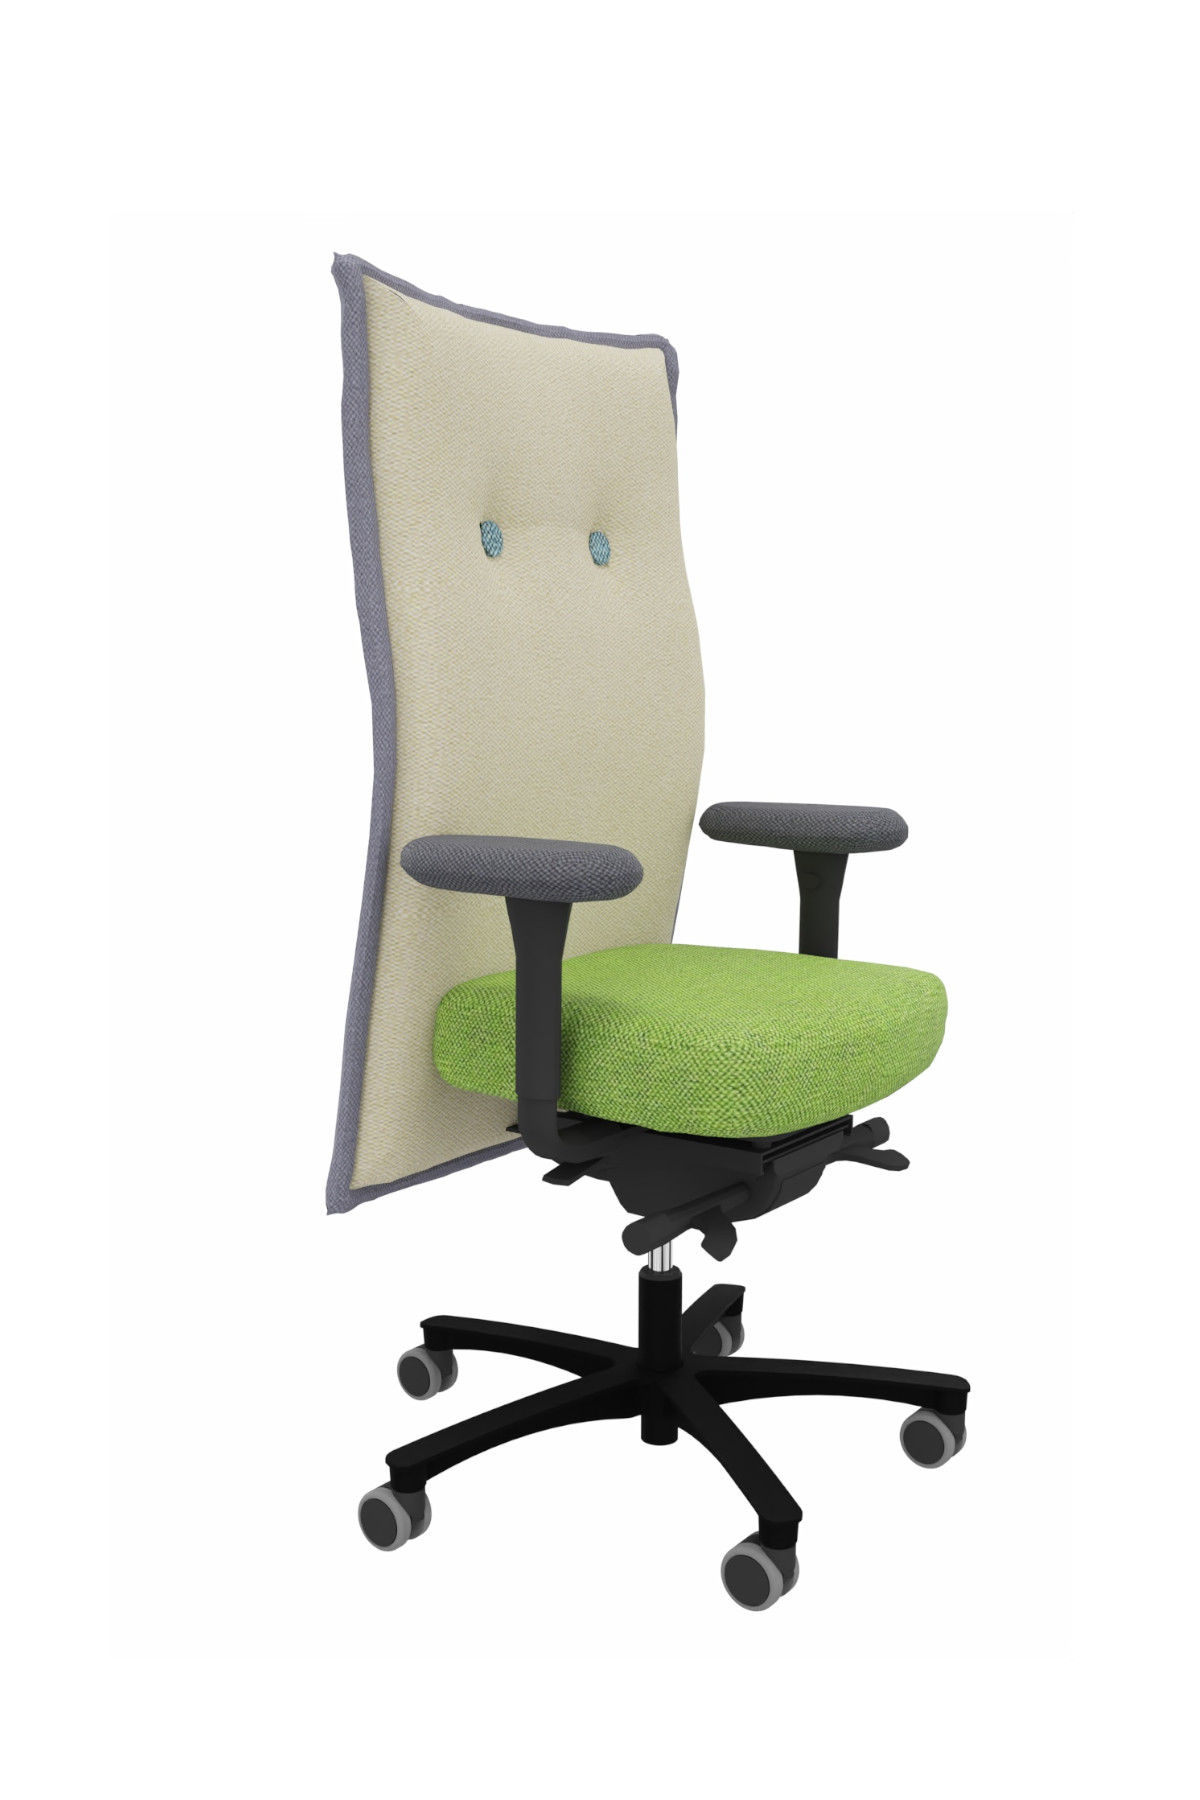 Löffler Brasilian Chair Bürodrehstuhl Bezug wählbar, hohe Rückenlehne